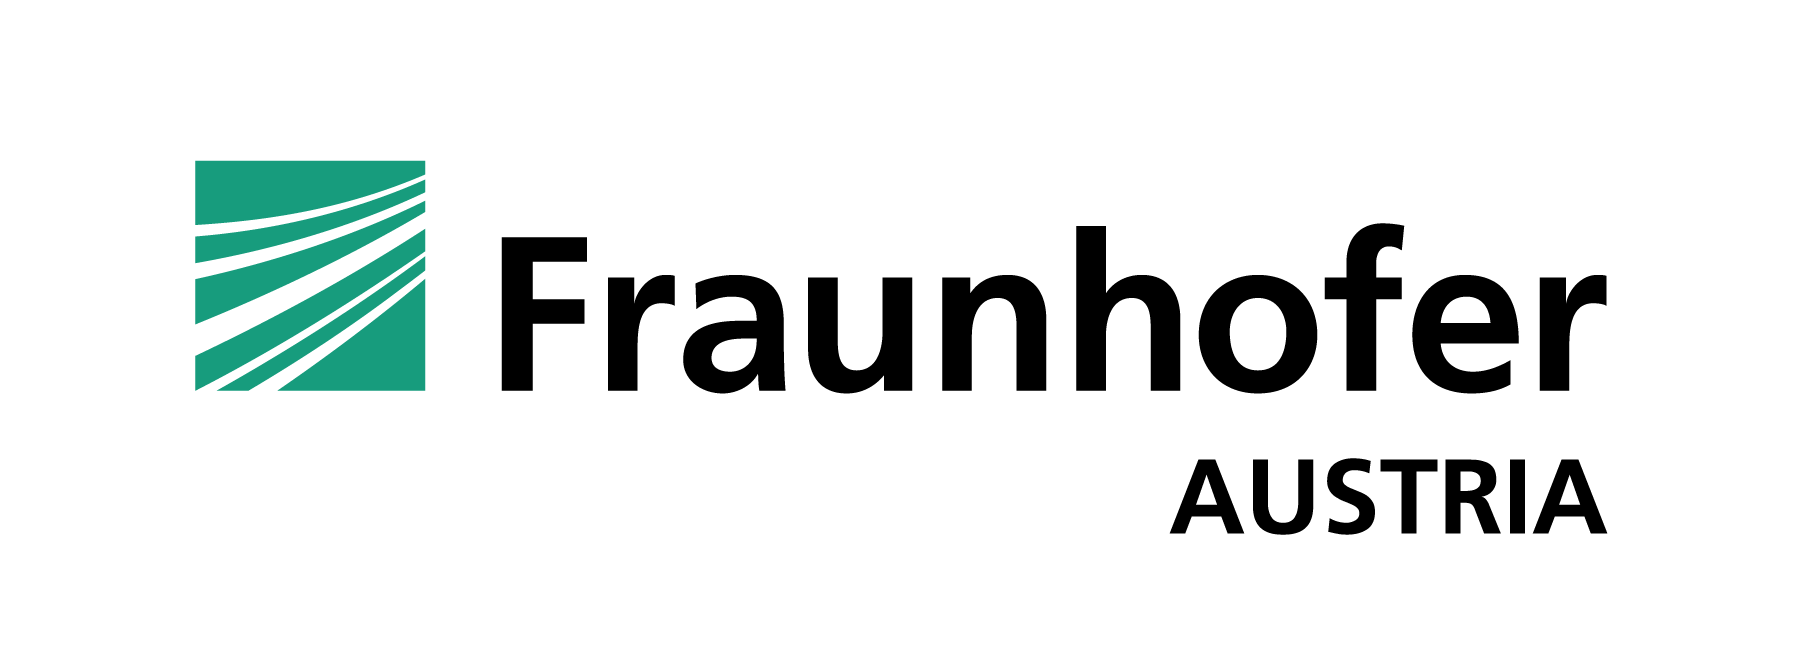 FraunhoferLogo-png